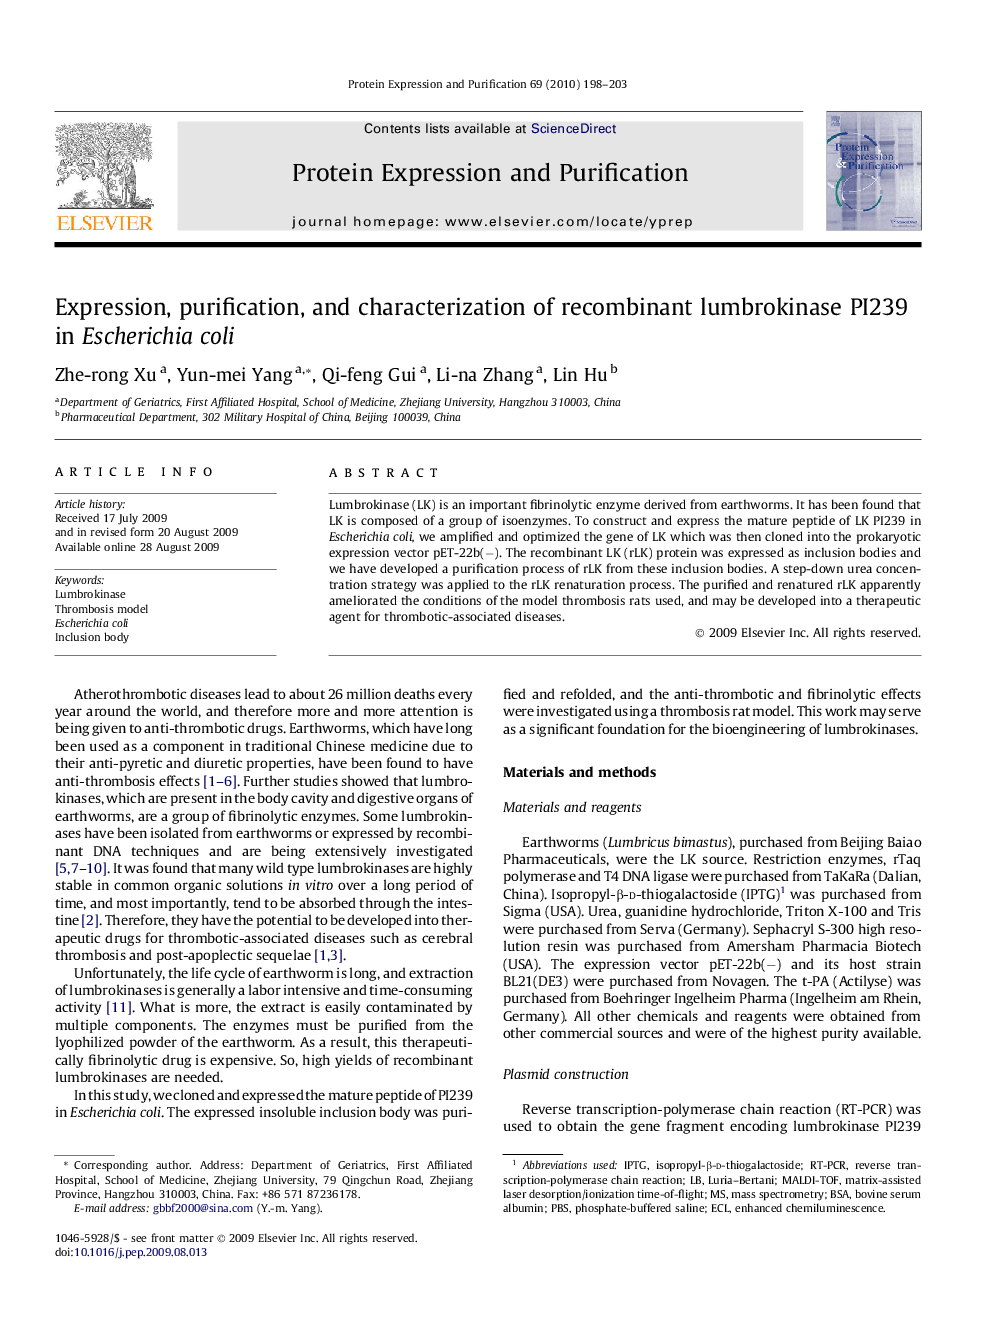 Expression, purification, and characterization of recombinant lumbrokinase PI239 in Escherichia coli